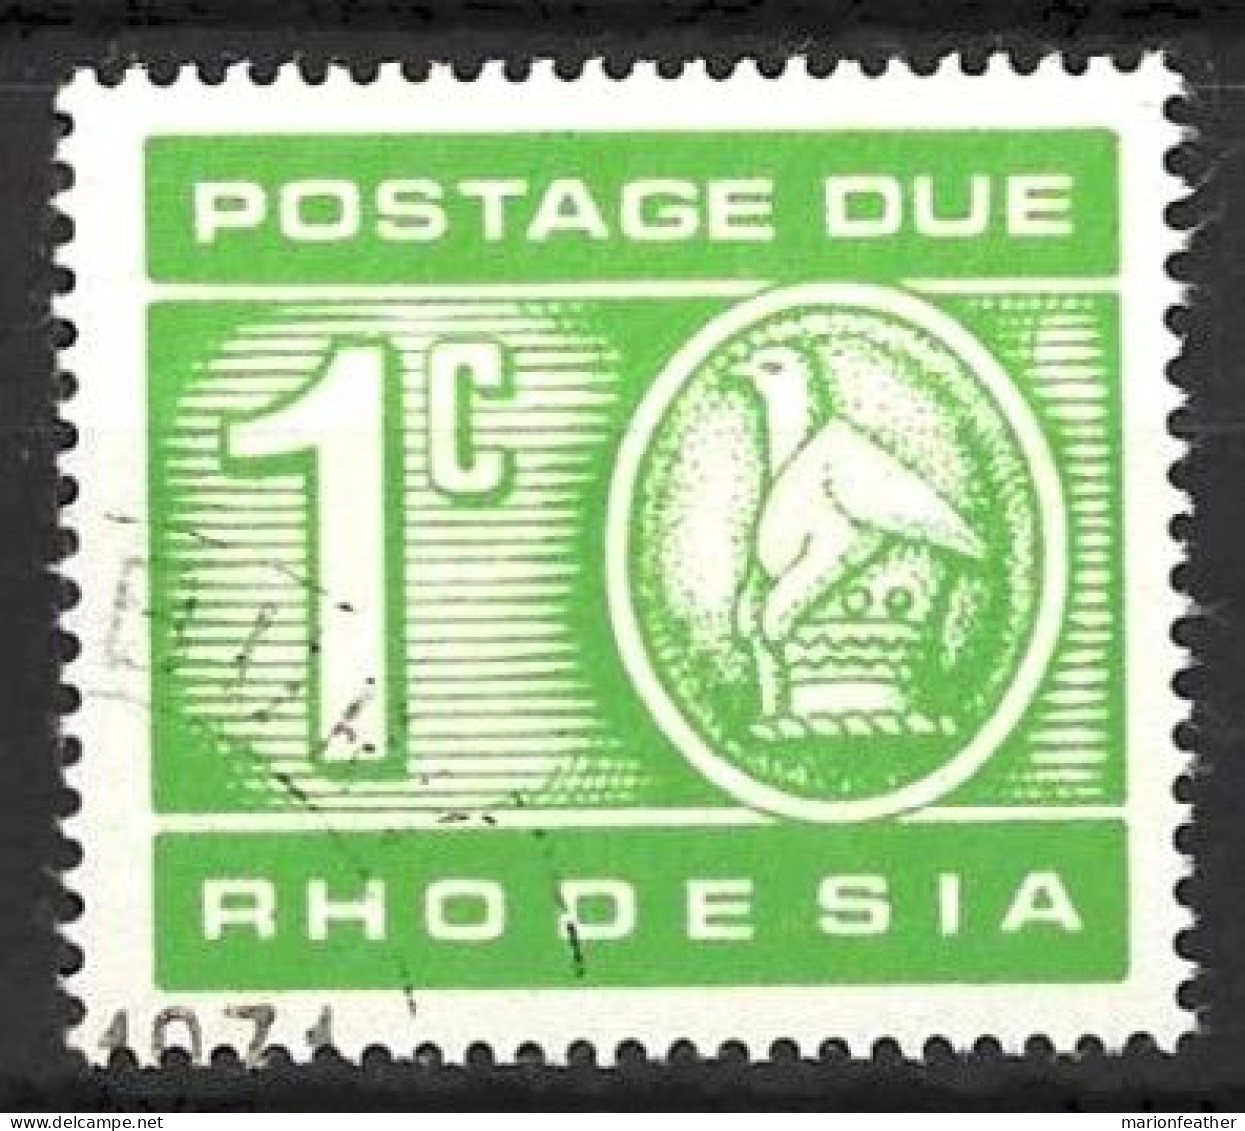 RHODESIA....QUEEN ELIZABETH II...(1952-22..)......" 1970.."...POSTAGE - DUE.....1c.......SGD18.........VFU.. - Rhodesia (1964-1980)